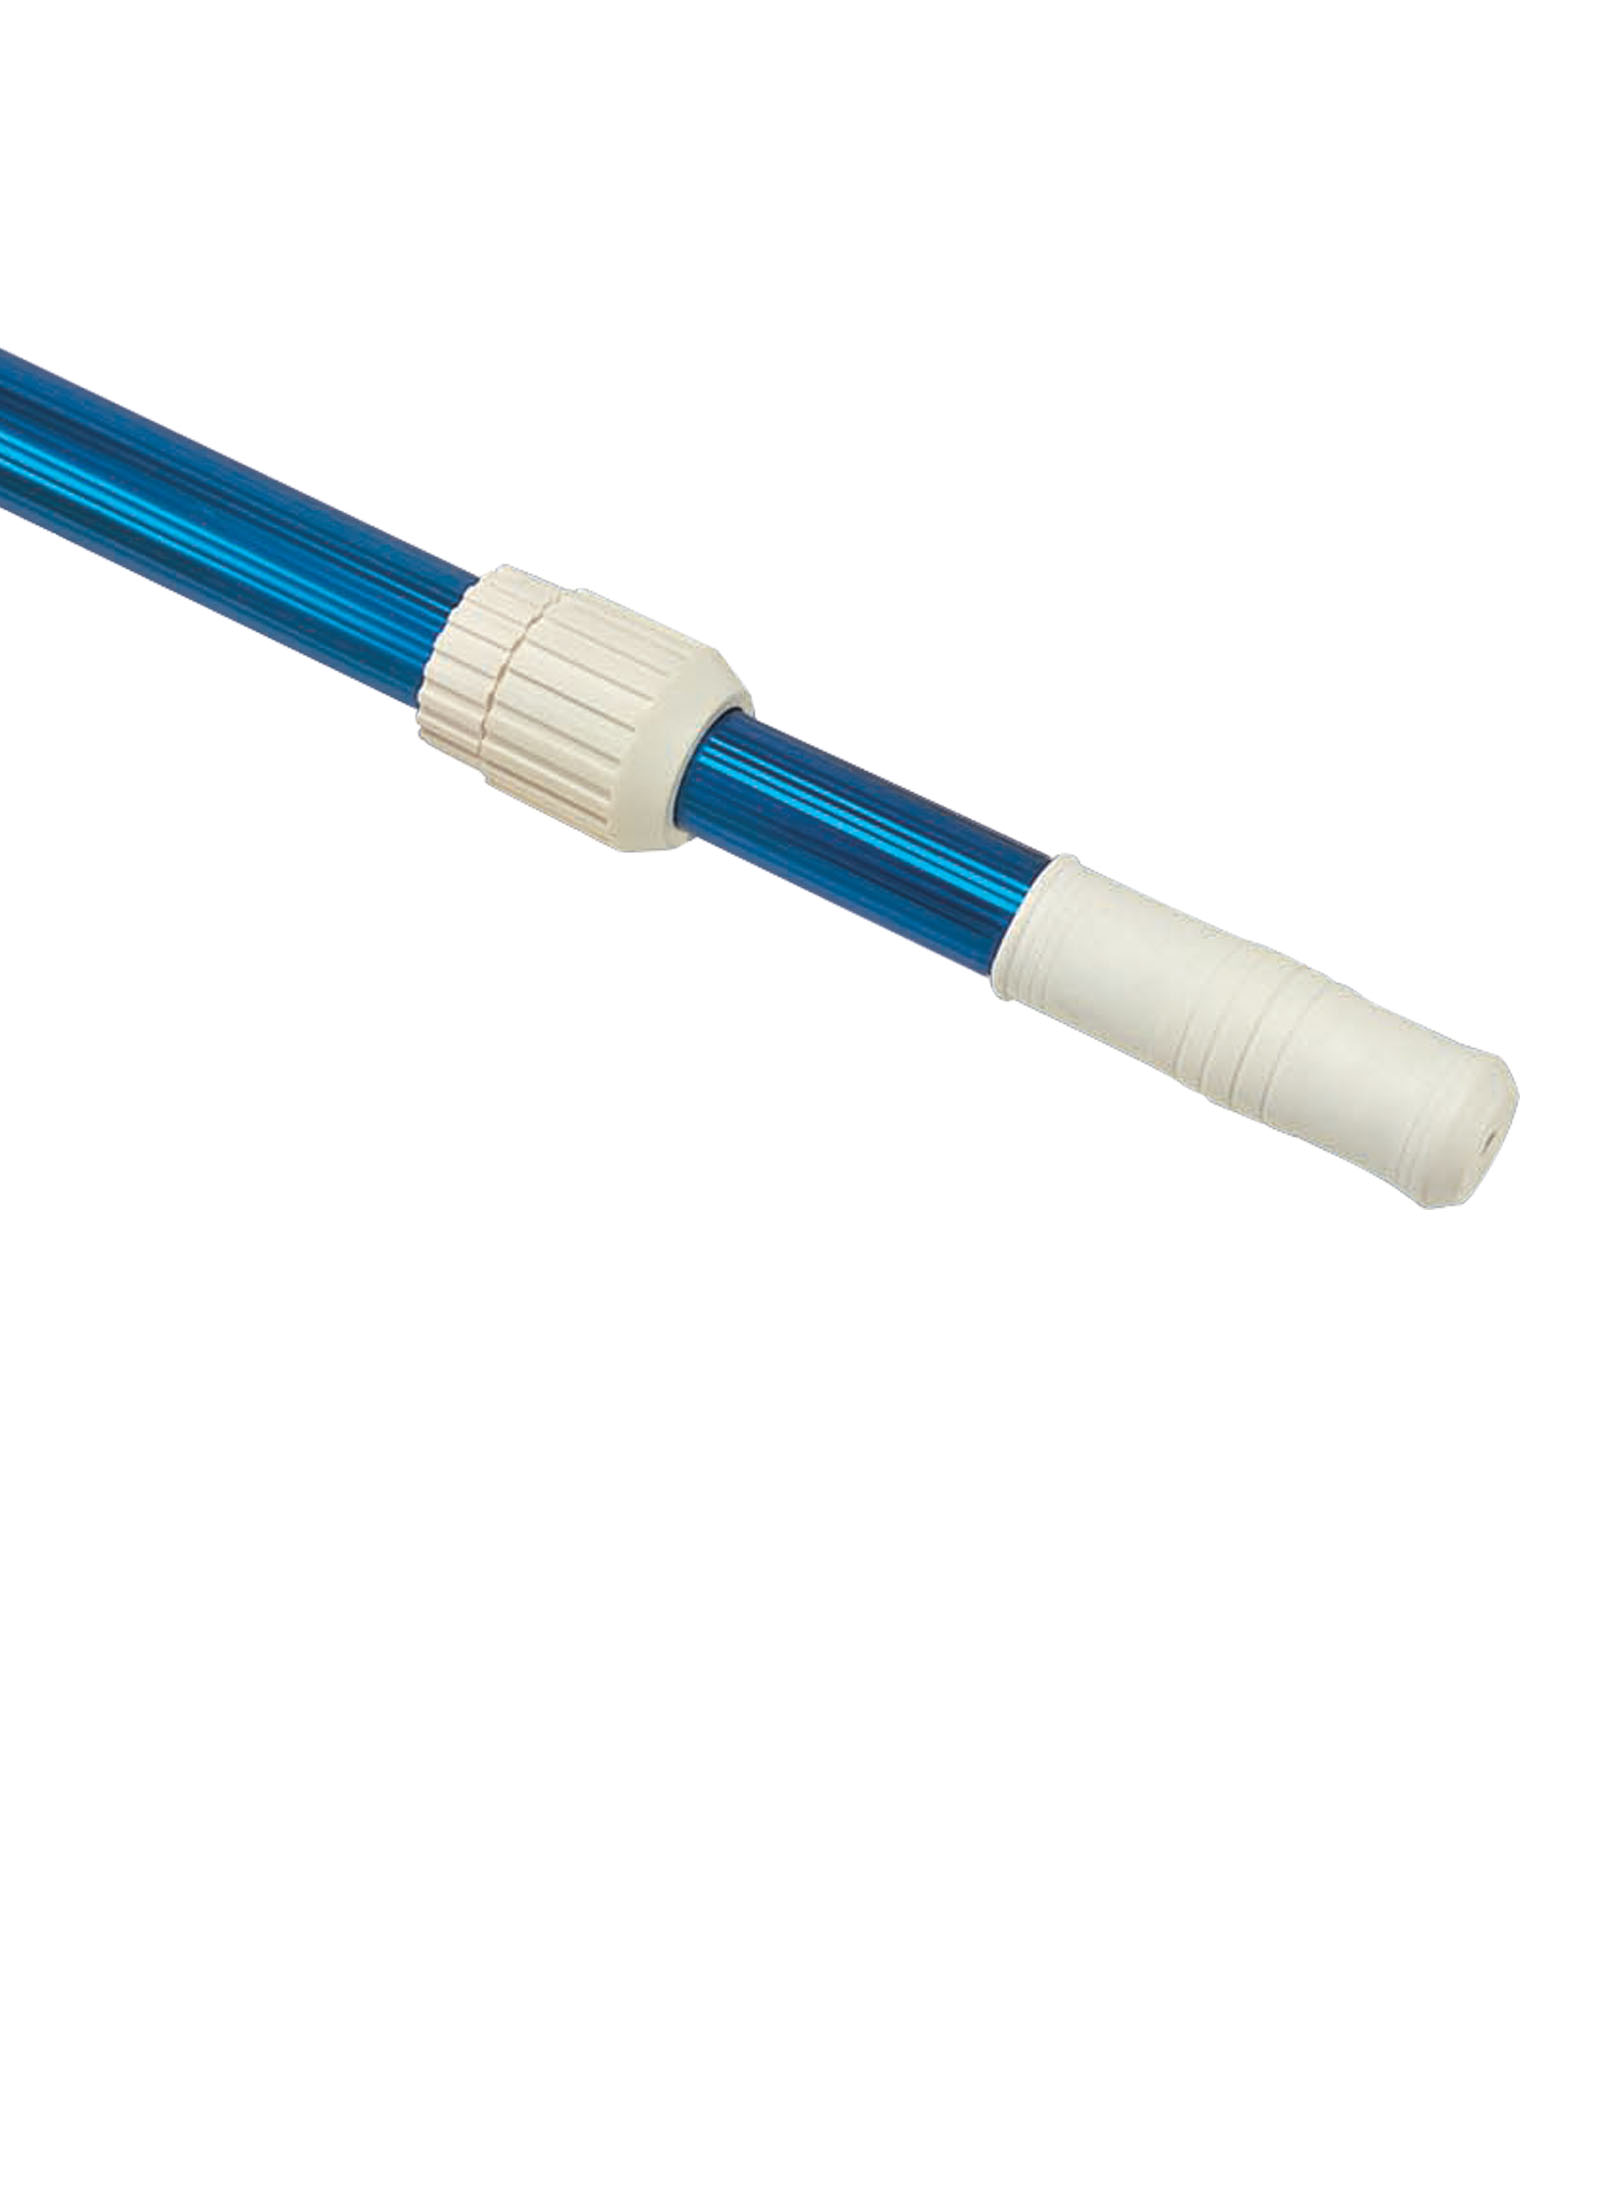 Vacuum Pole 6-12 Ft- Blue Ribbed 100010EE - MAINTENANCE EQUIPMENT